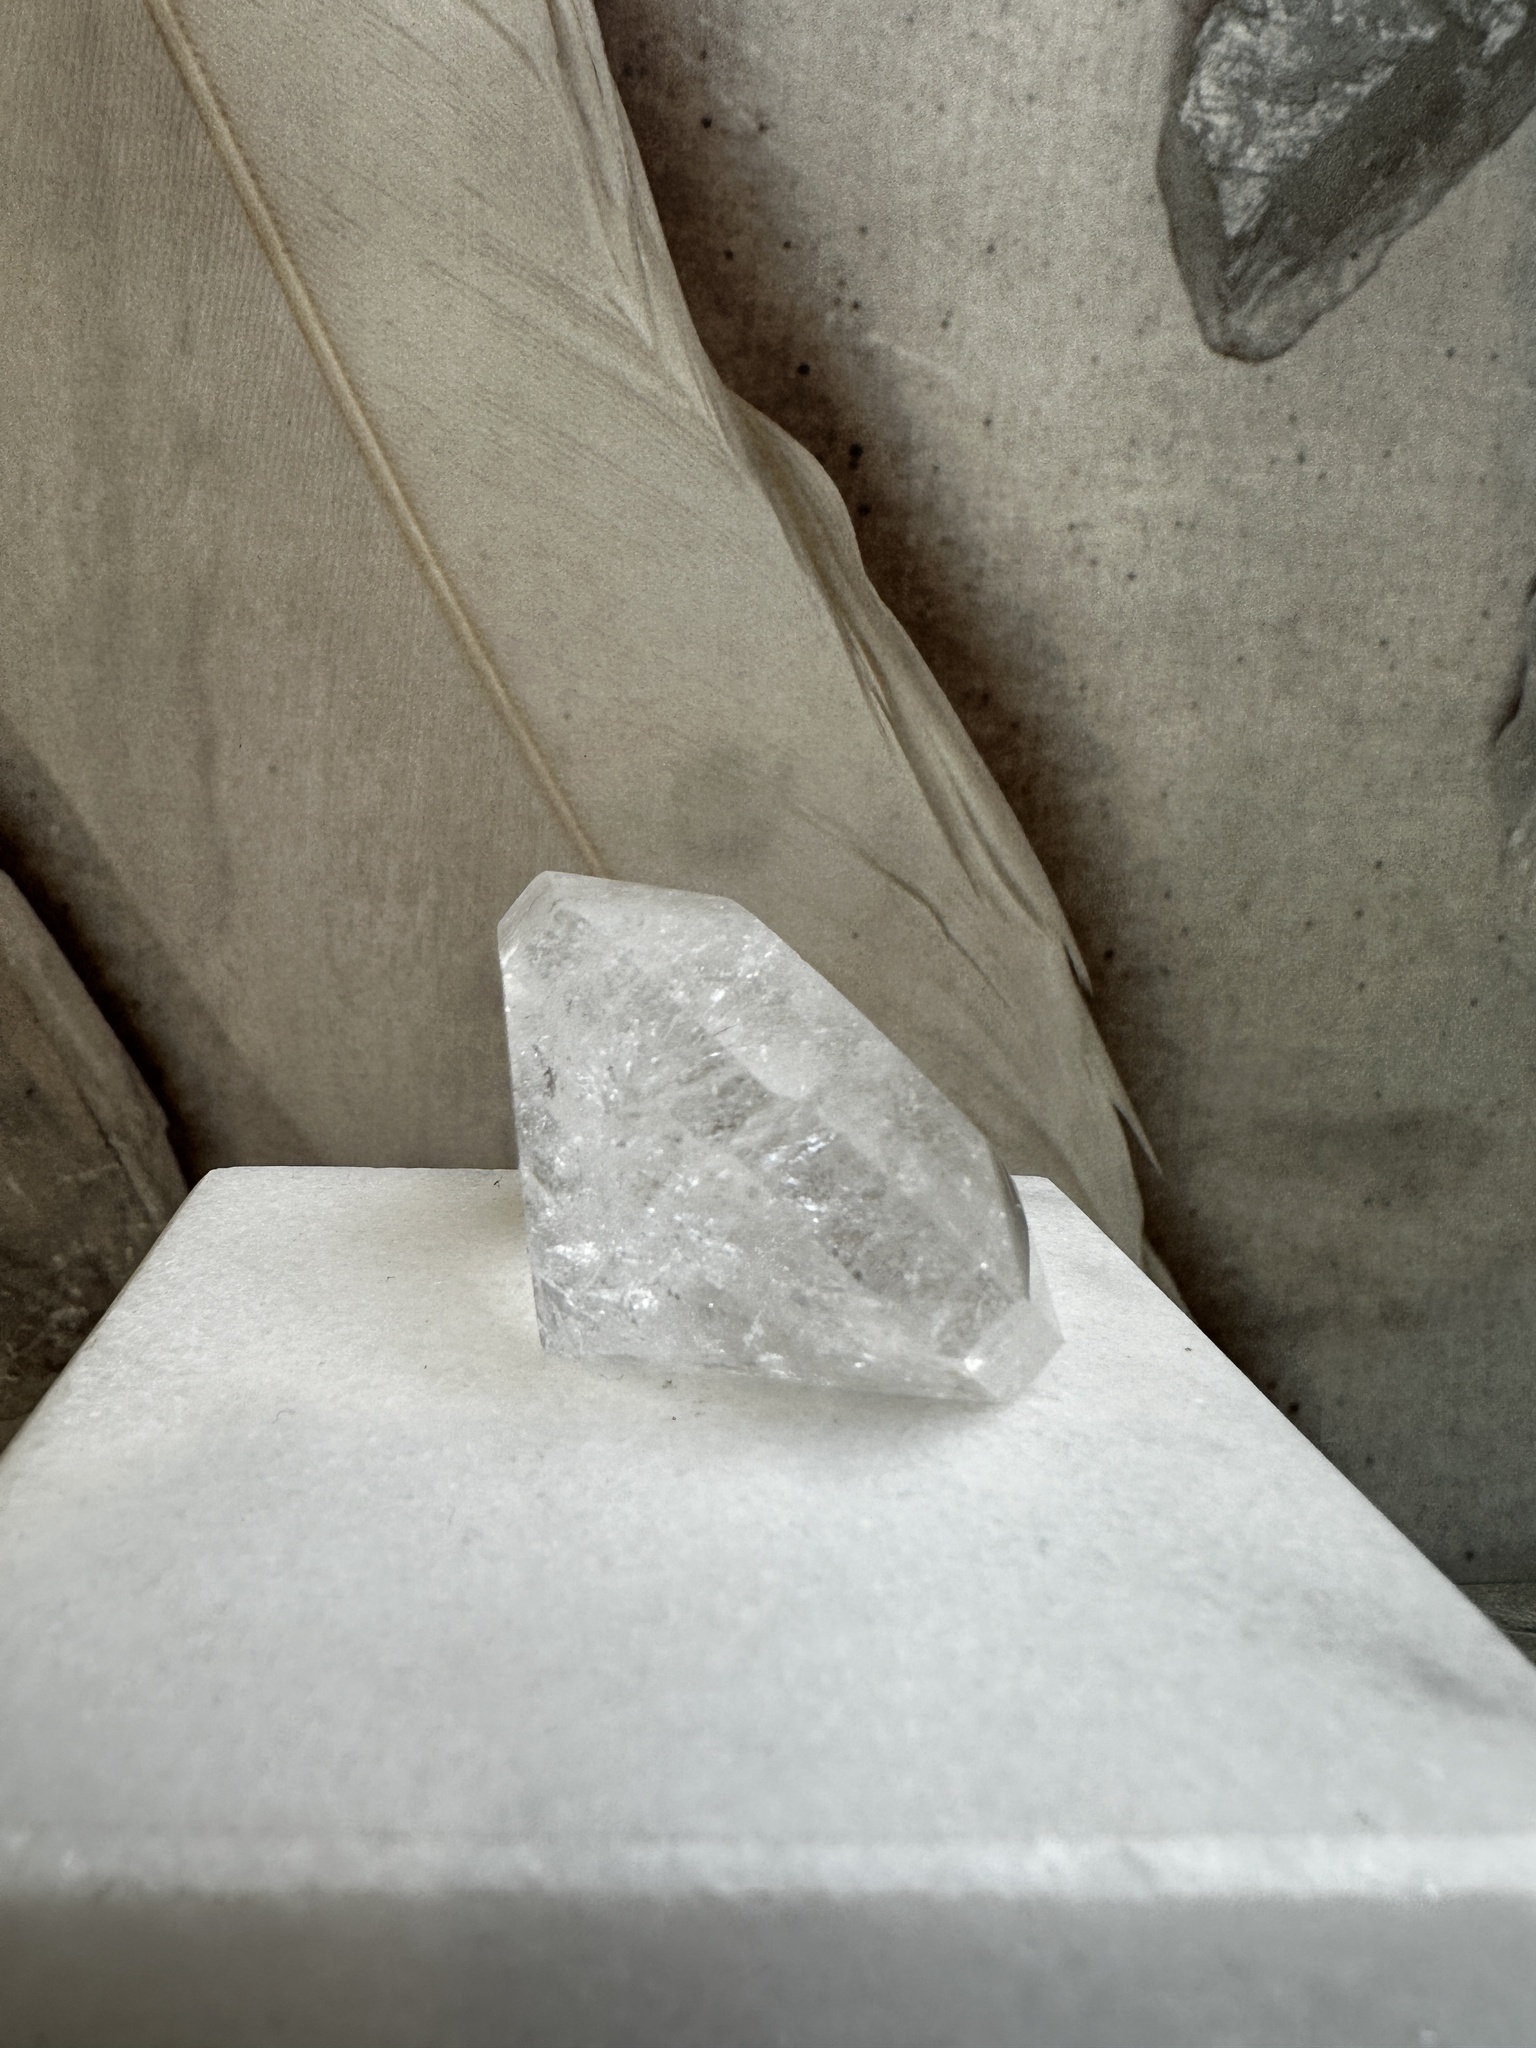 Bergkristall, diamant lite naggad på ena sidan